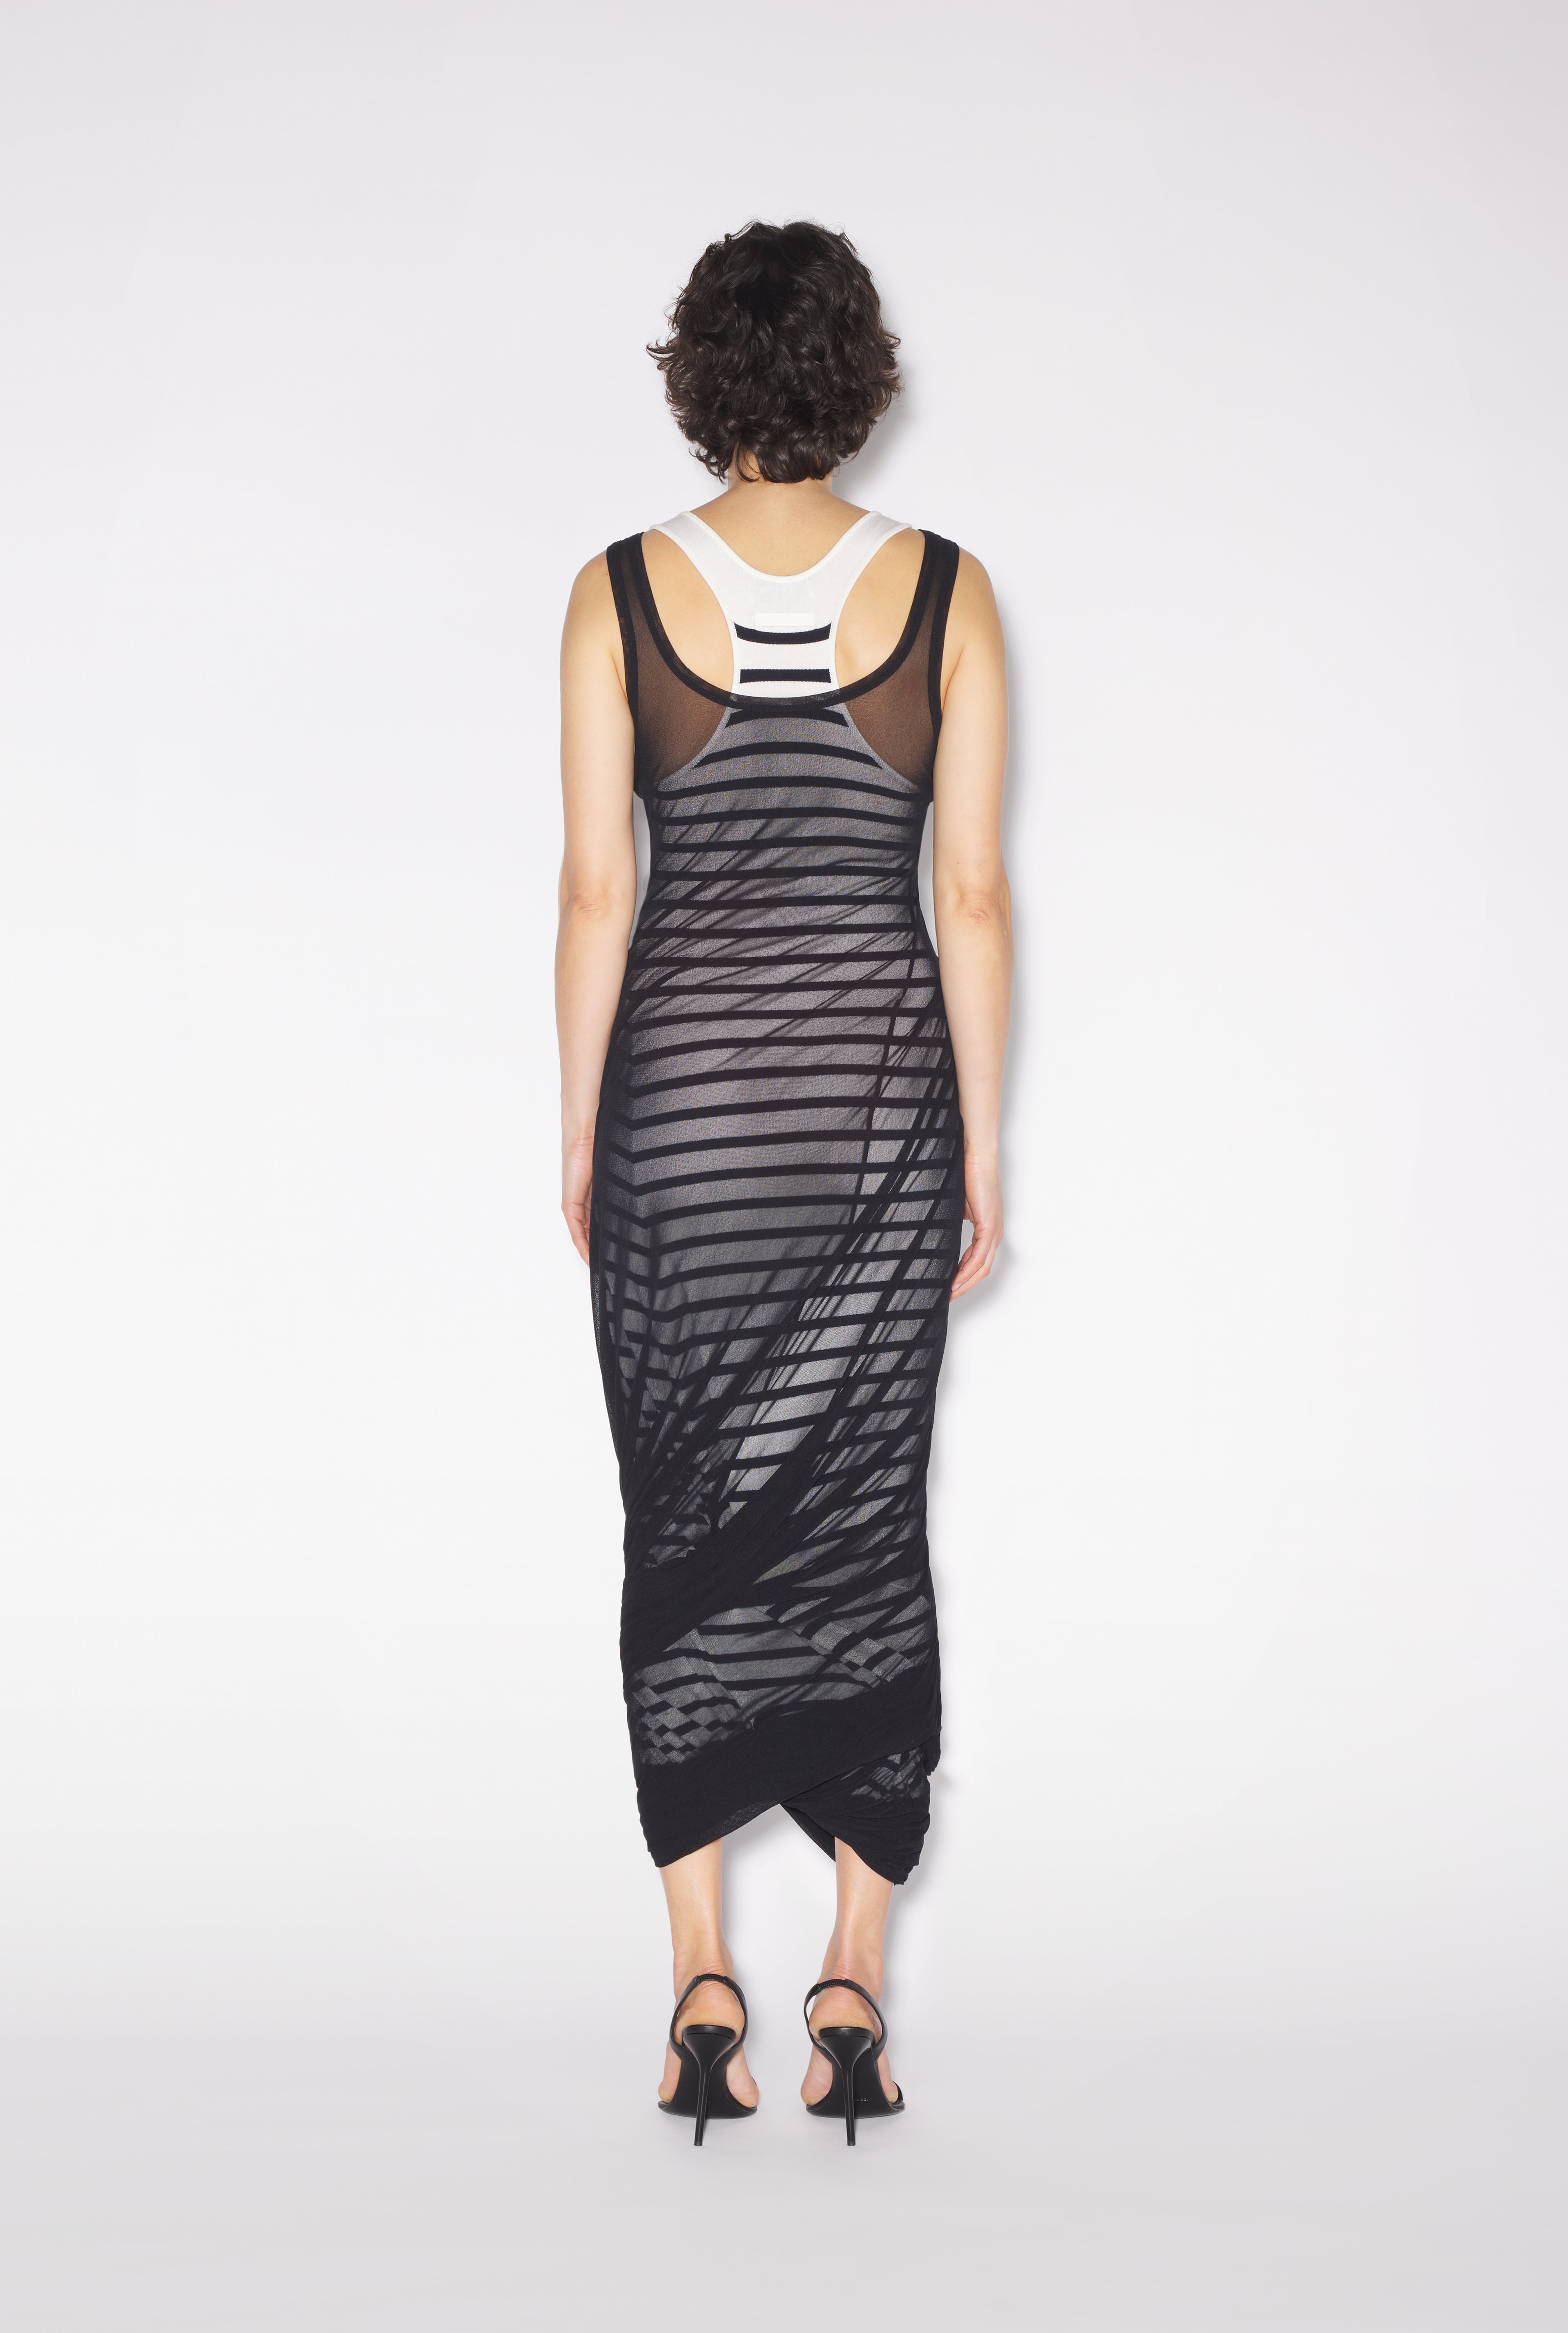 The Mid-Length Knit Marinière Dress